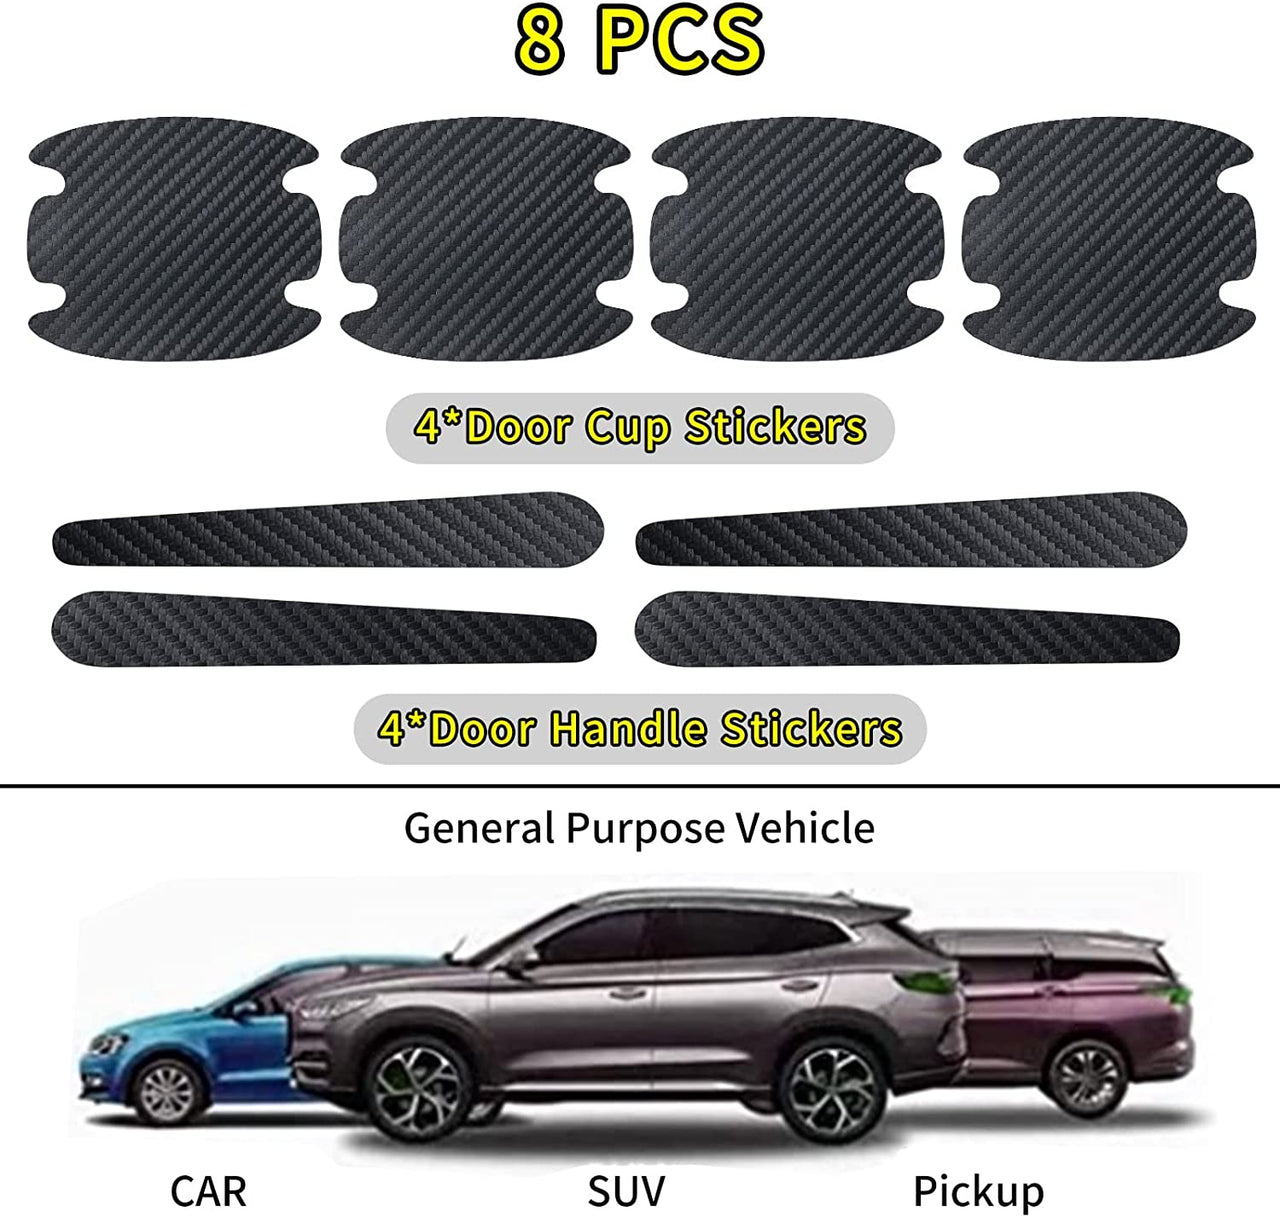 8 Pack Car Carbon Fiber Stickers Compatible with Cars Door Handles Door Cup Protectors Carbon Fiber Stickers Scratch Resistant Accessories